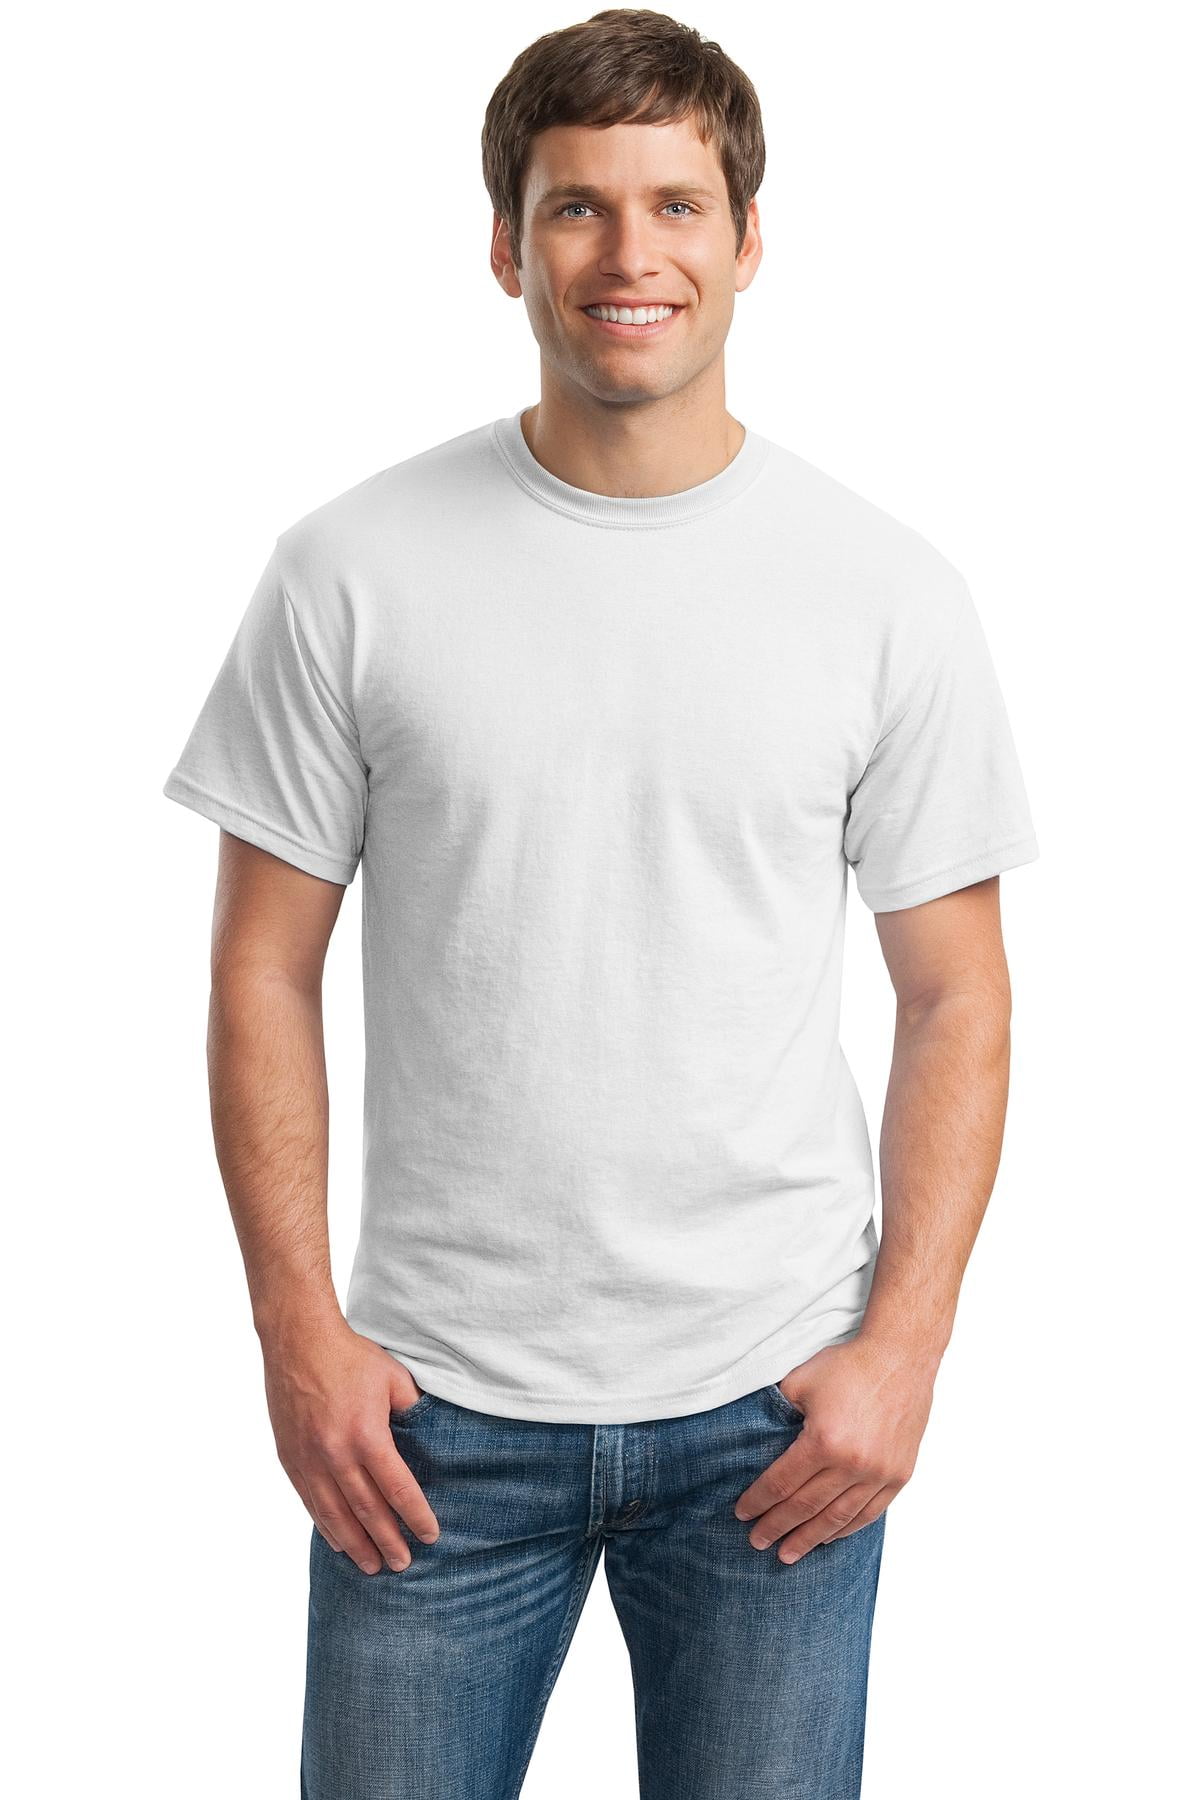 Gildan Men's Short Sleeve DryBlend 50 Cotton/50 Poly T-Shirt - 8000 ...